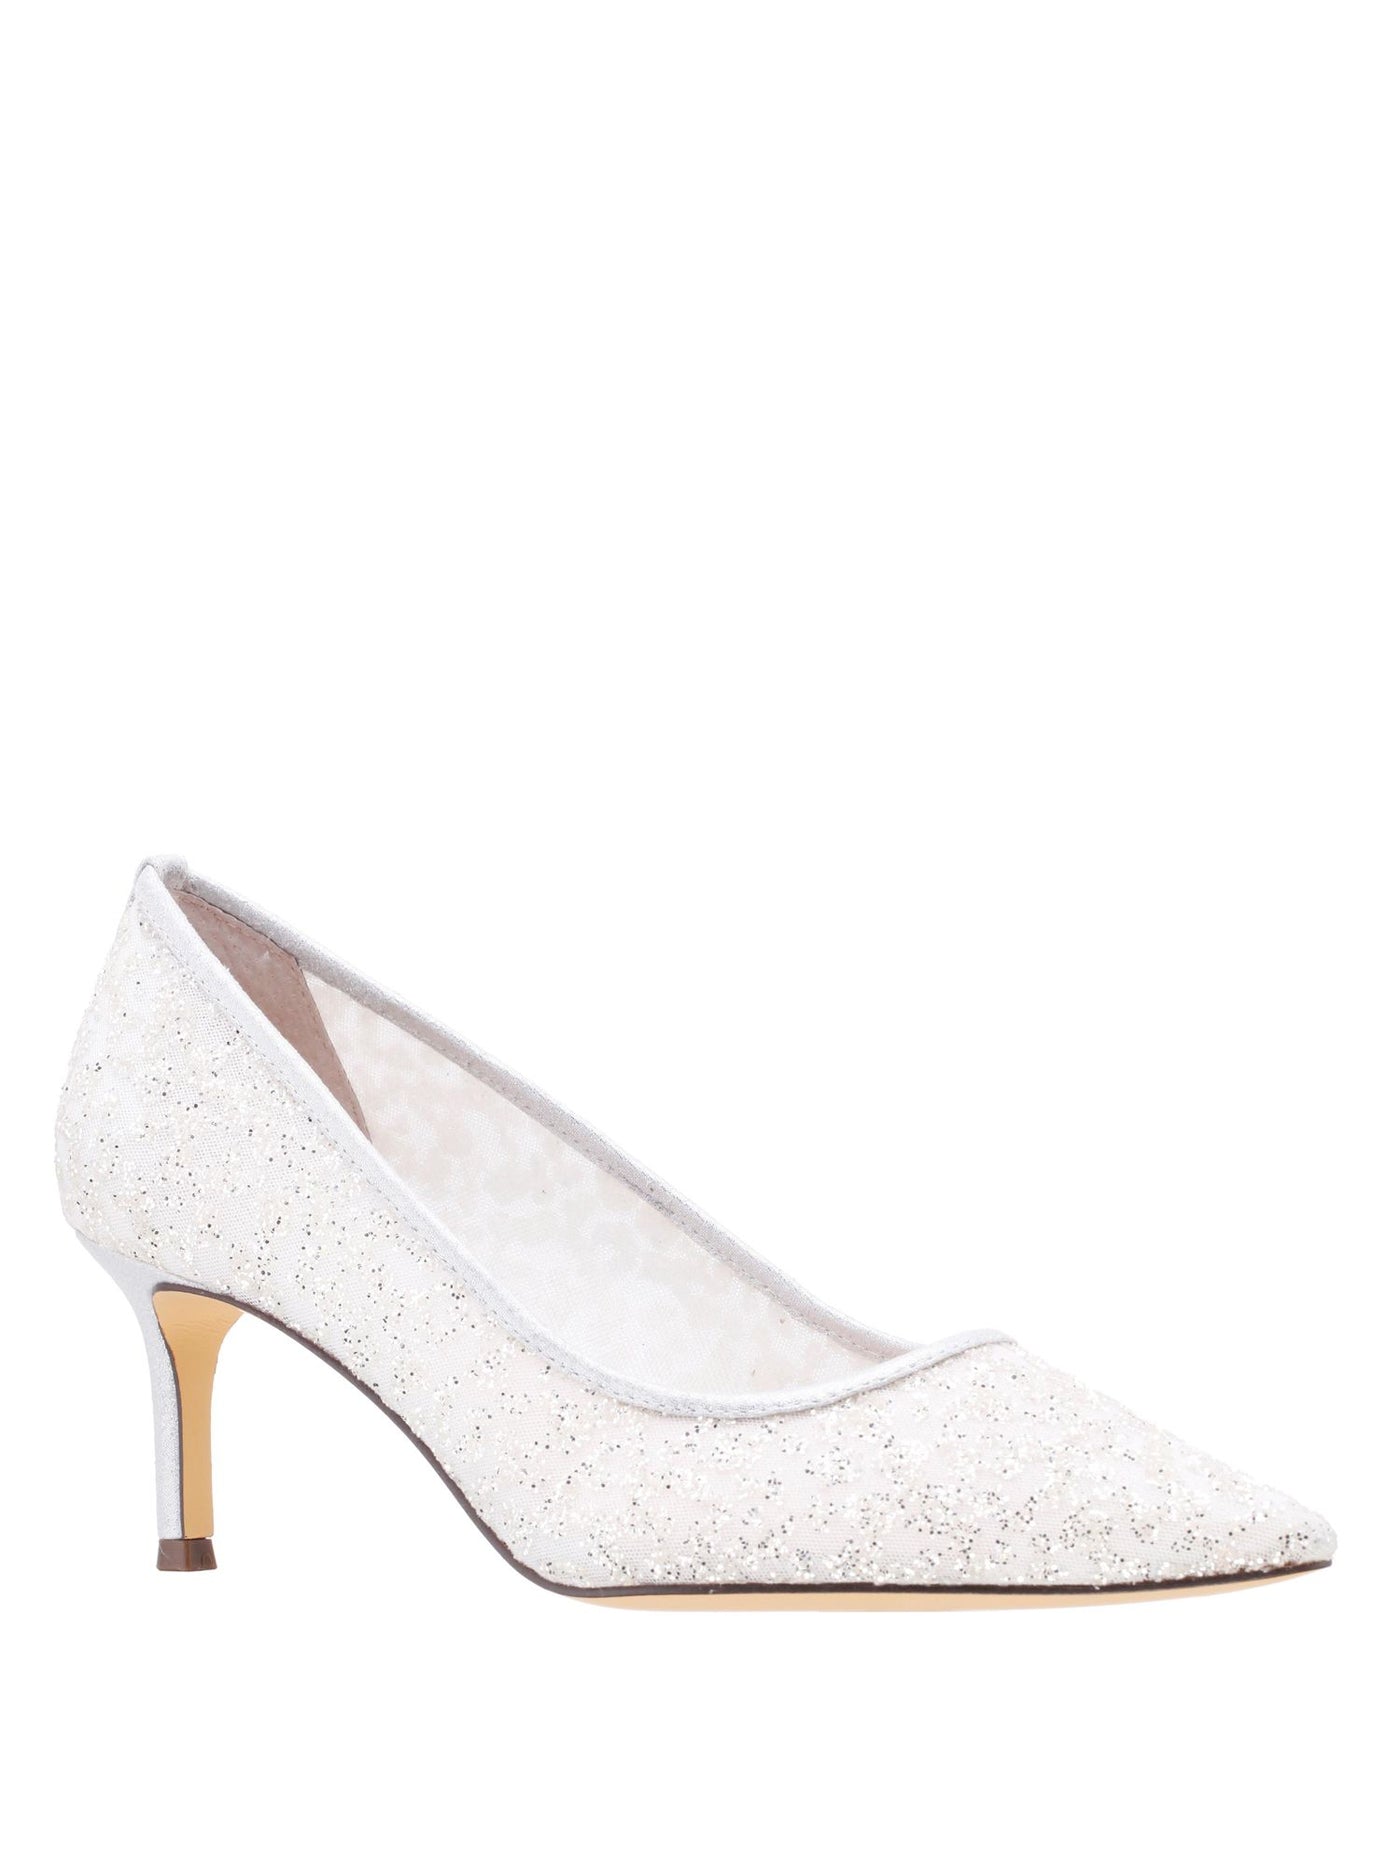 NINA NEW YORK Womens Silver Glitter Padded Nikki Pointed Toe Stiletto Slip On Dress Pumps Shoes 7.5 M